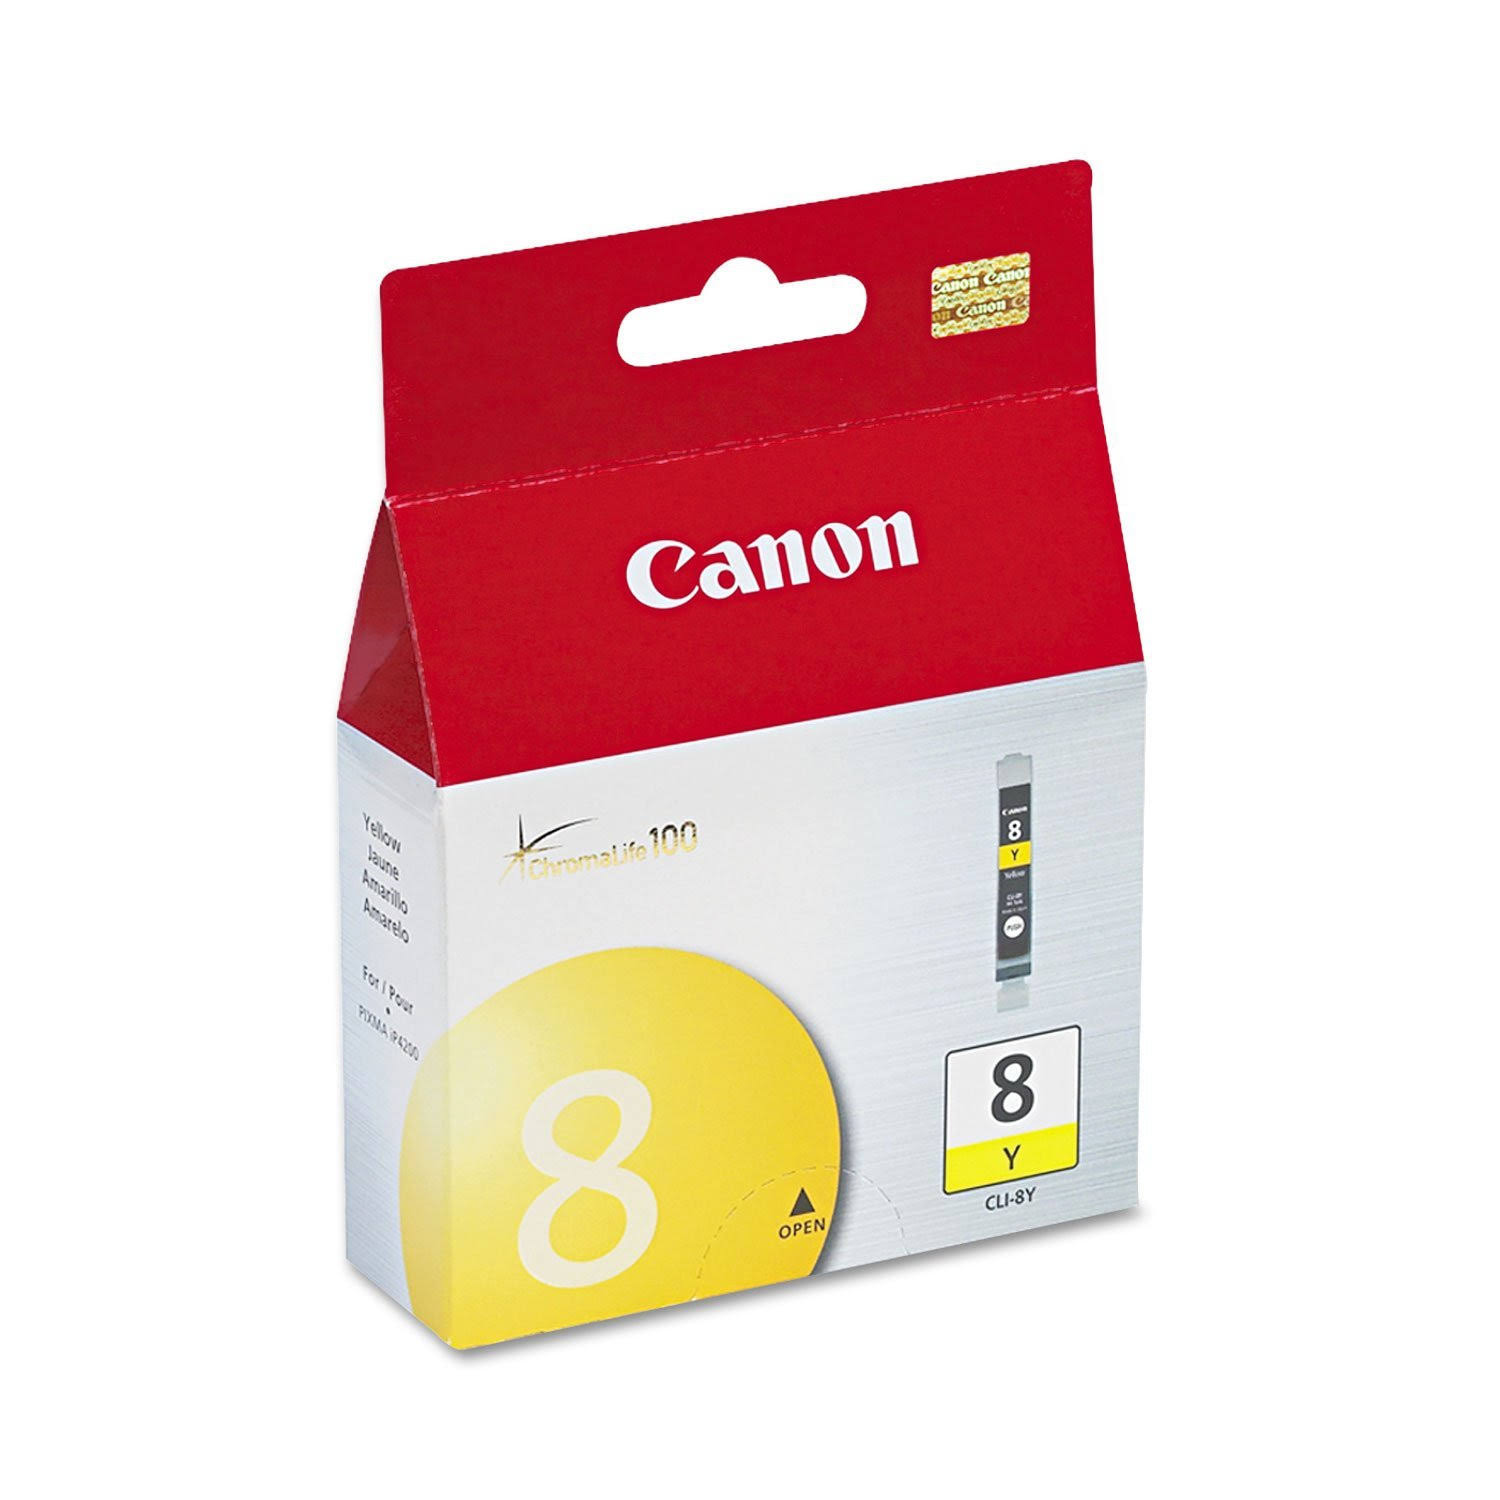 Canon Cli-8Y Ink Cartridge - Yellow